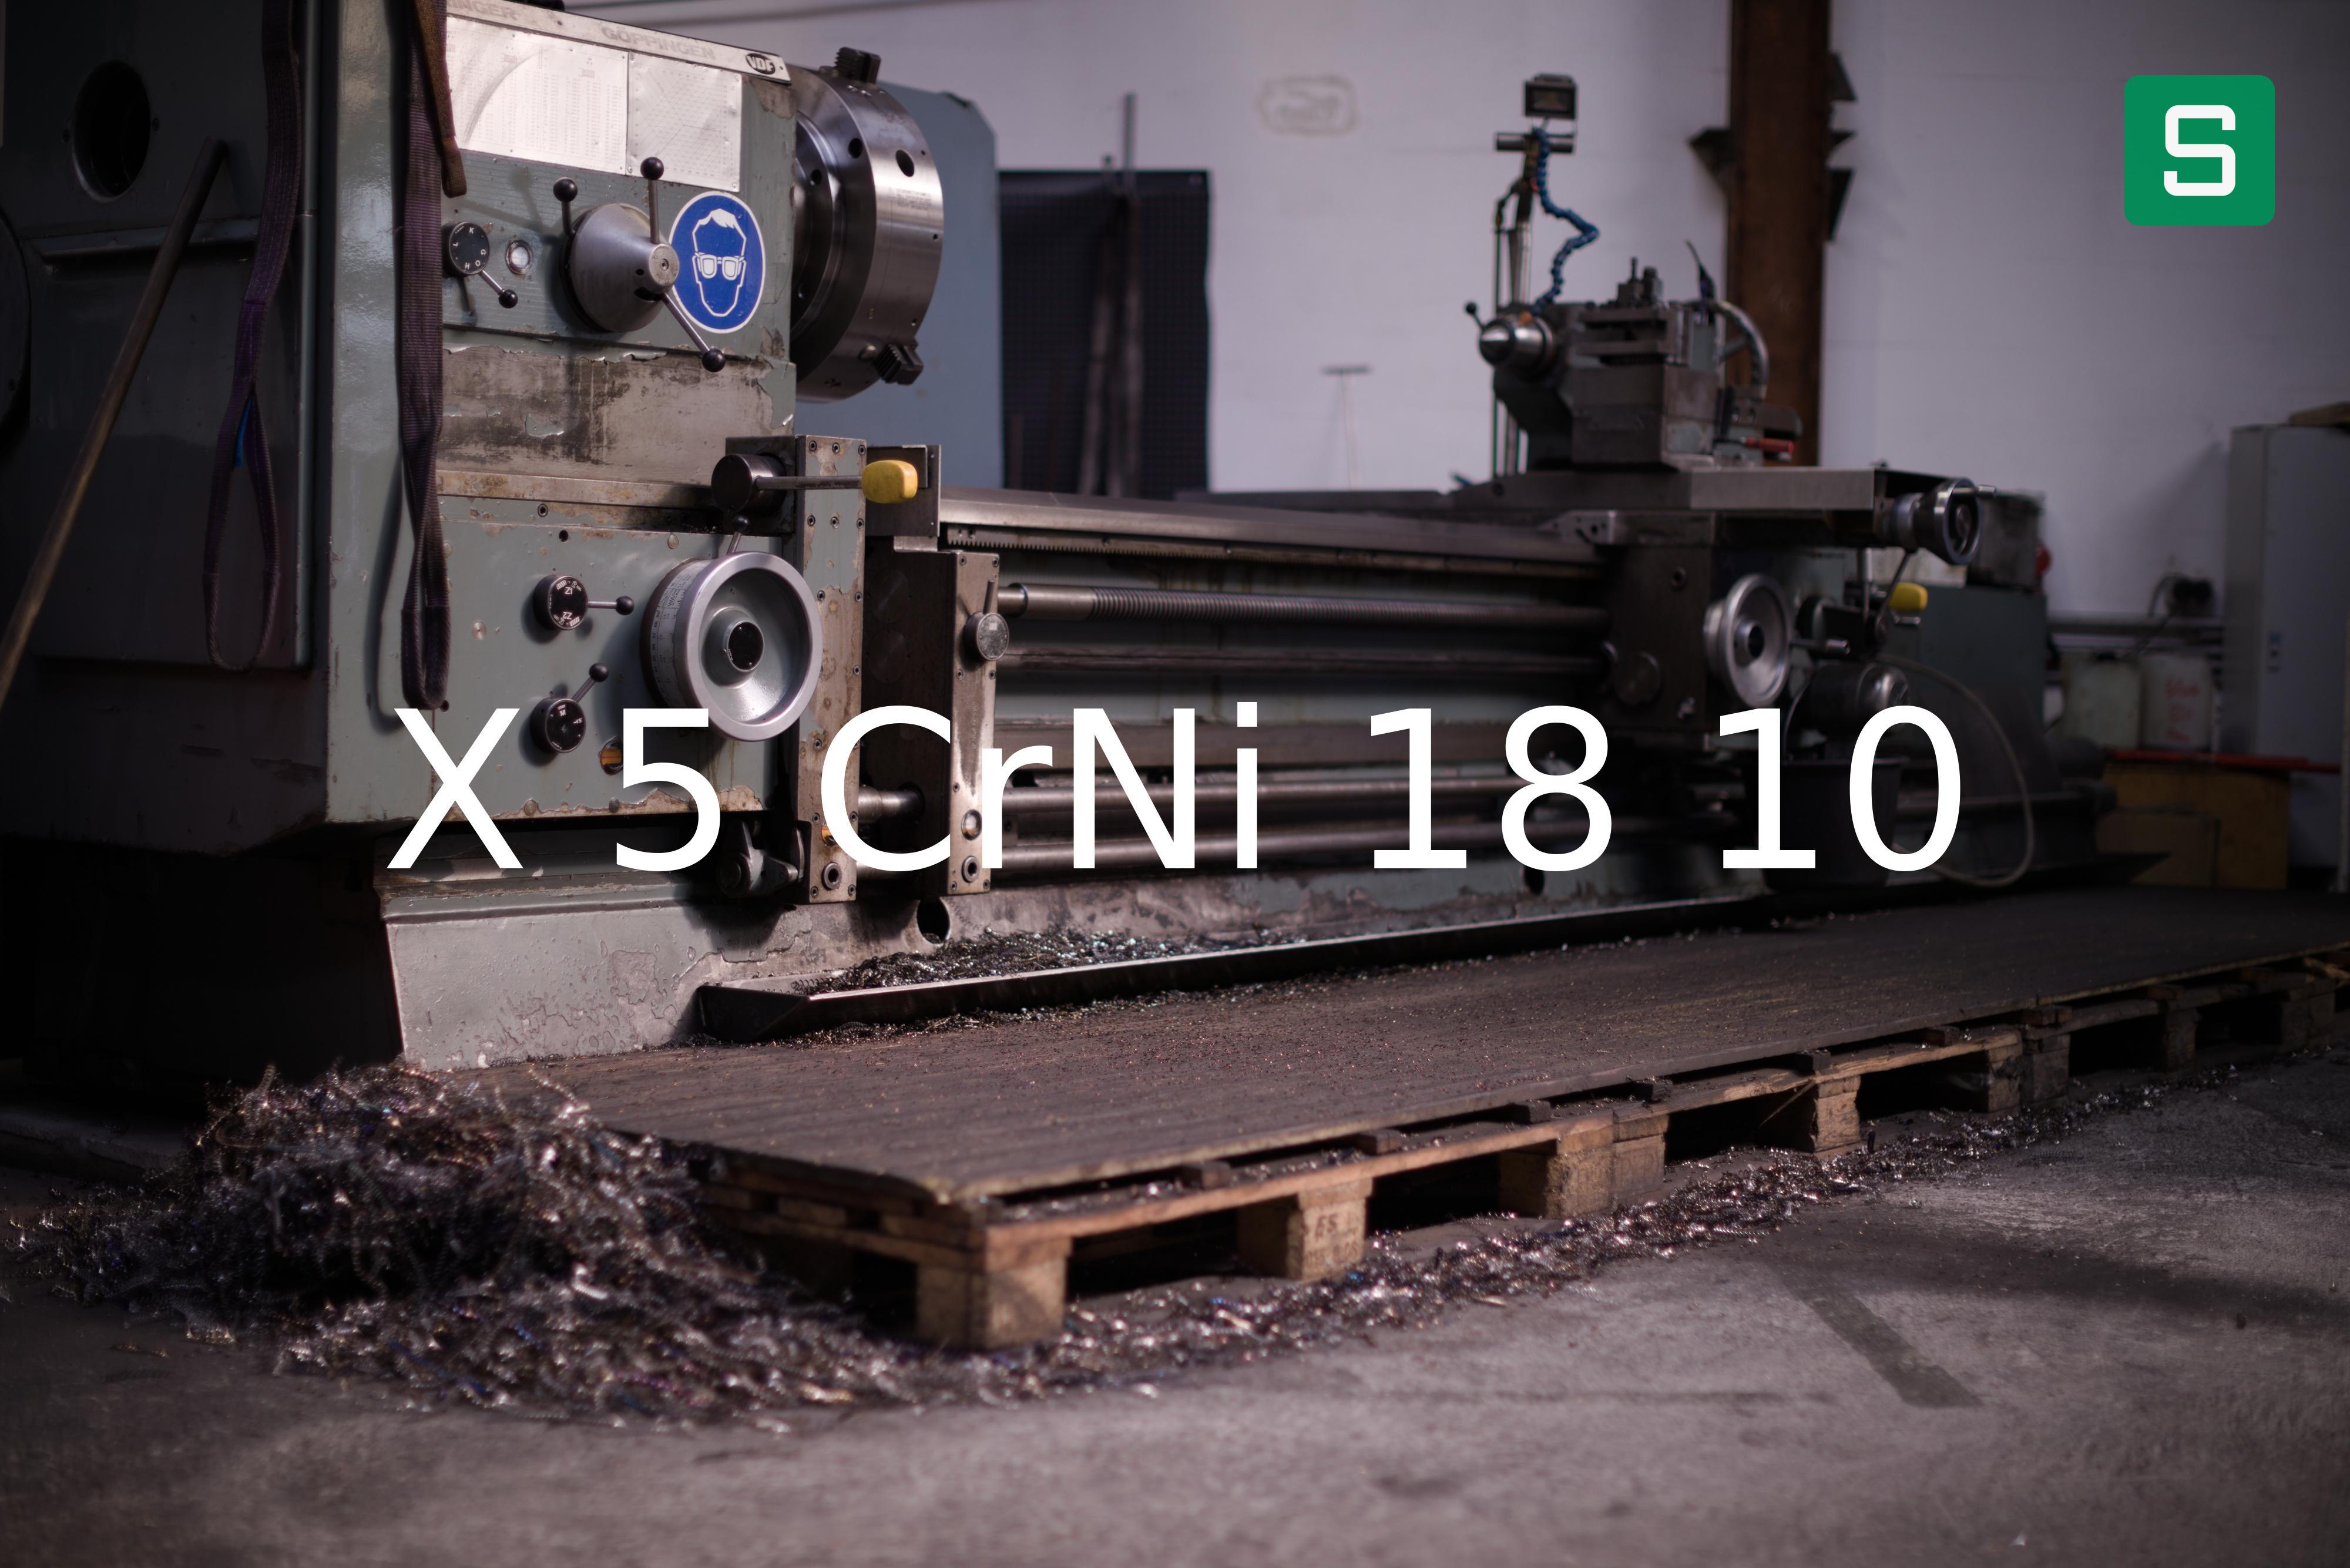 Steel Material: X 5 CrNi 18 10